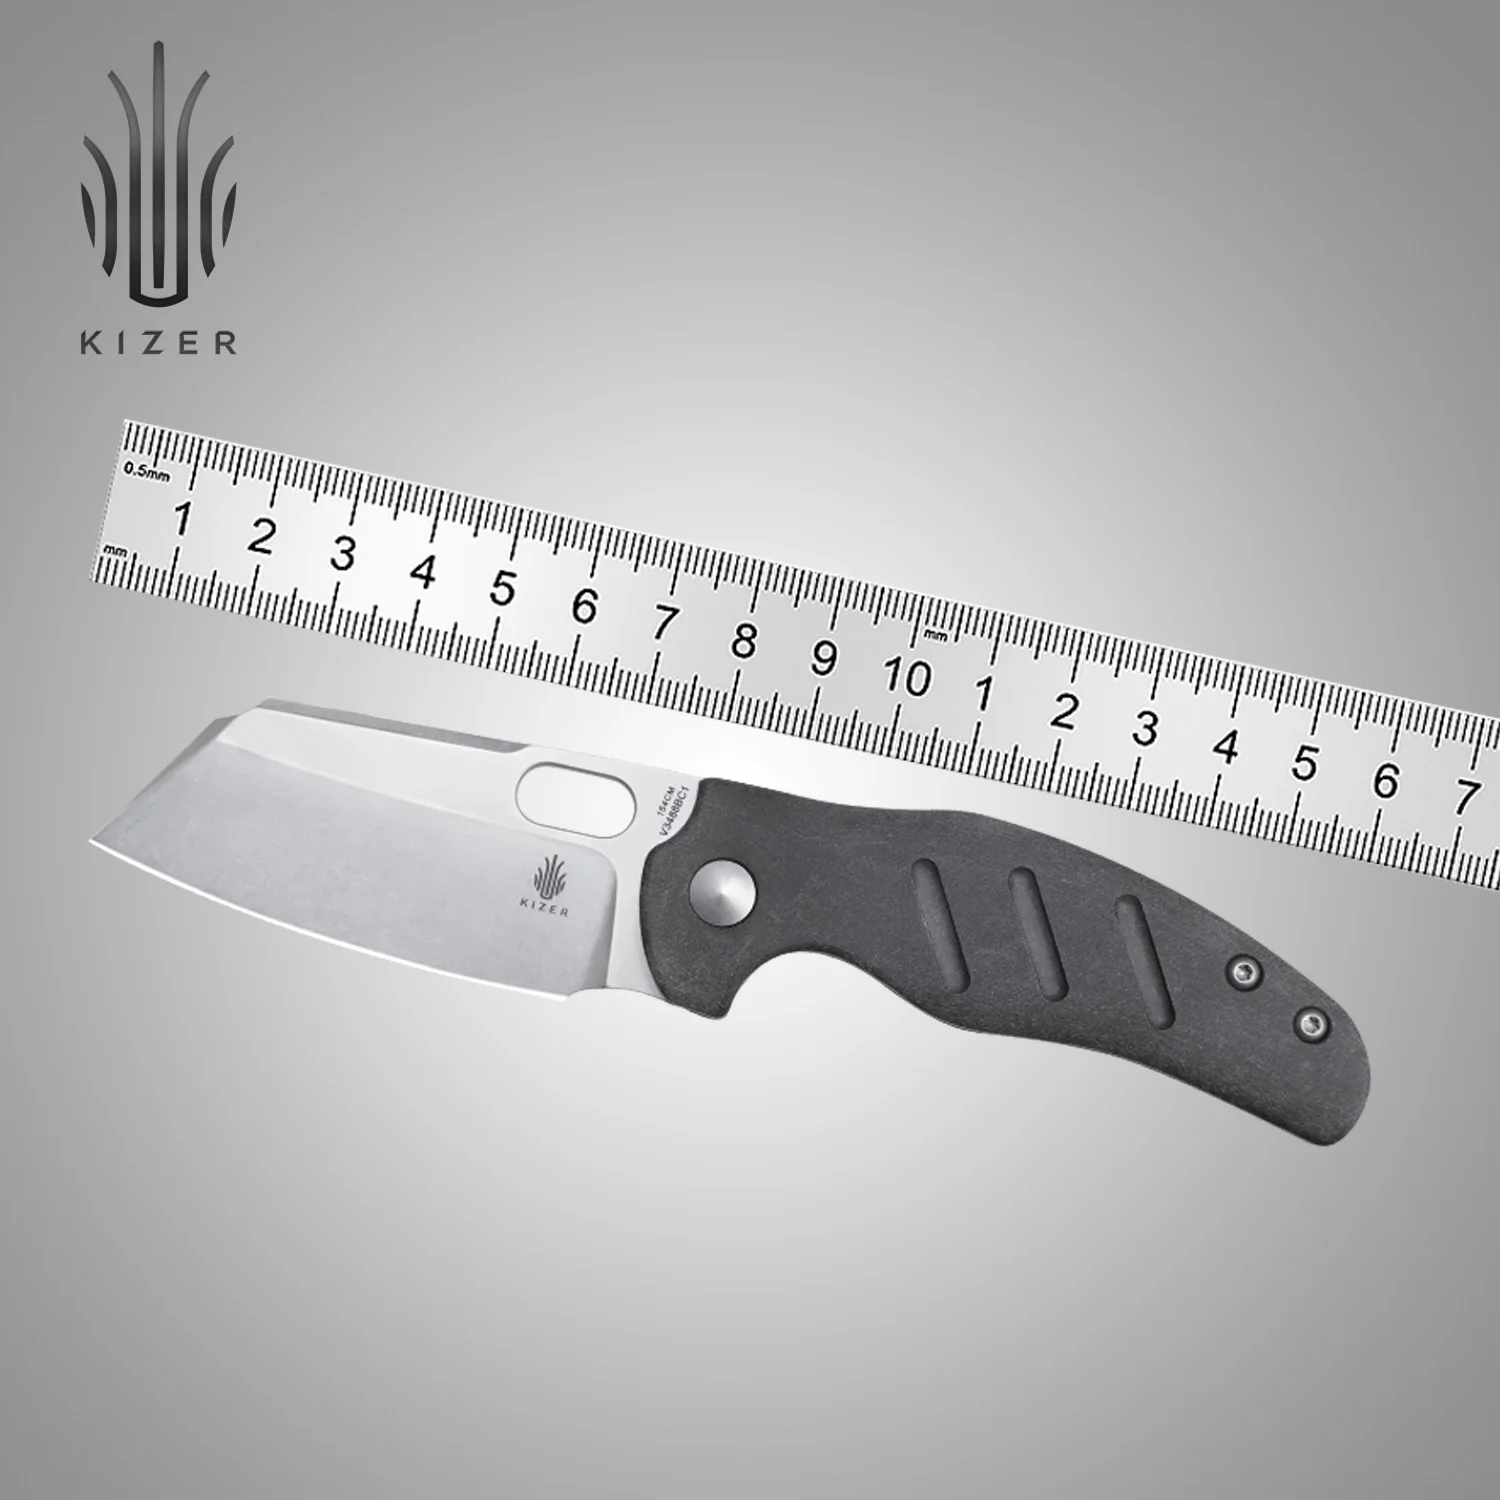 Kizer Folding Pocket Knife V3488BC1/V3488BC2 Mini C01C Designed by Sheepdog 2022 New Richlite/Aluminium Handle Survival Knives